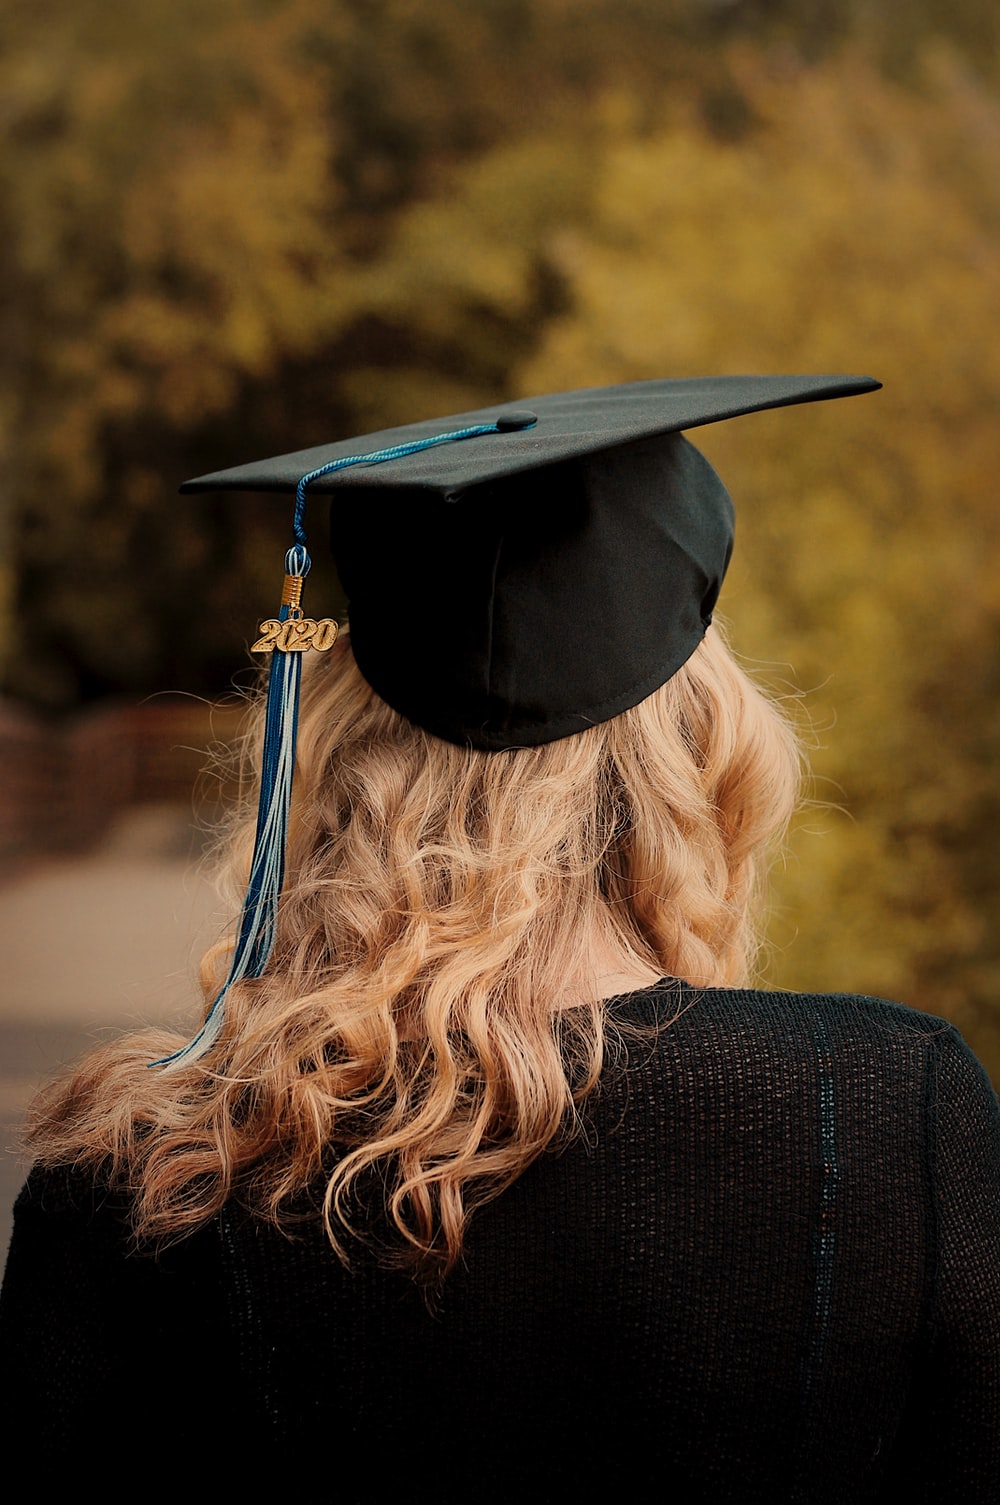 person holding graduation hat photo